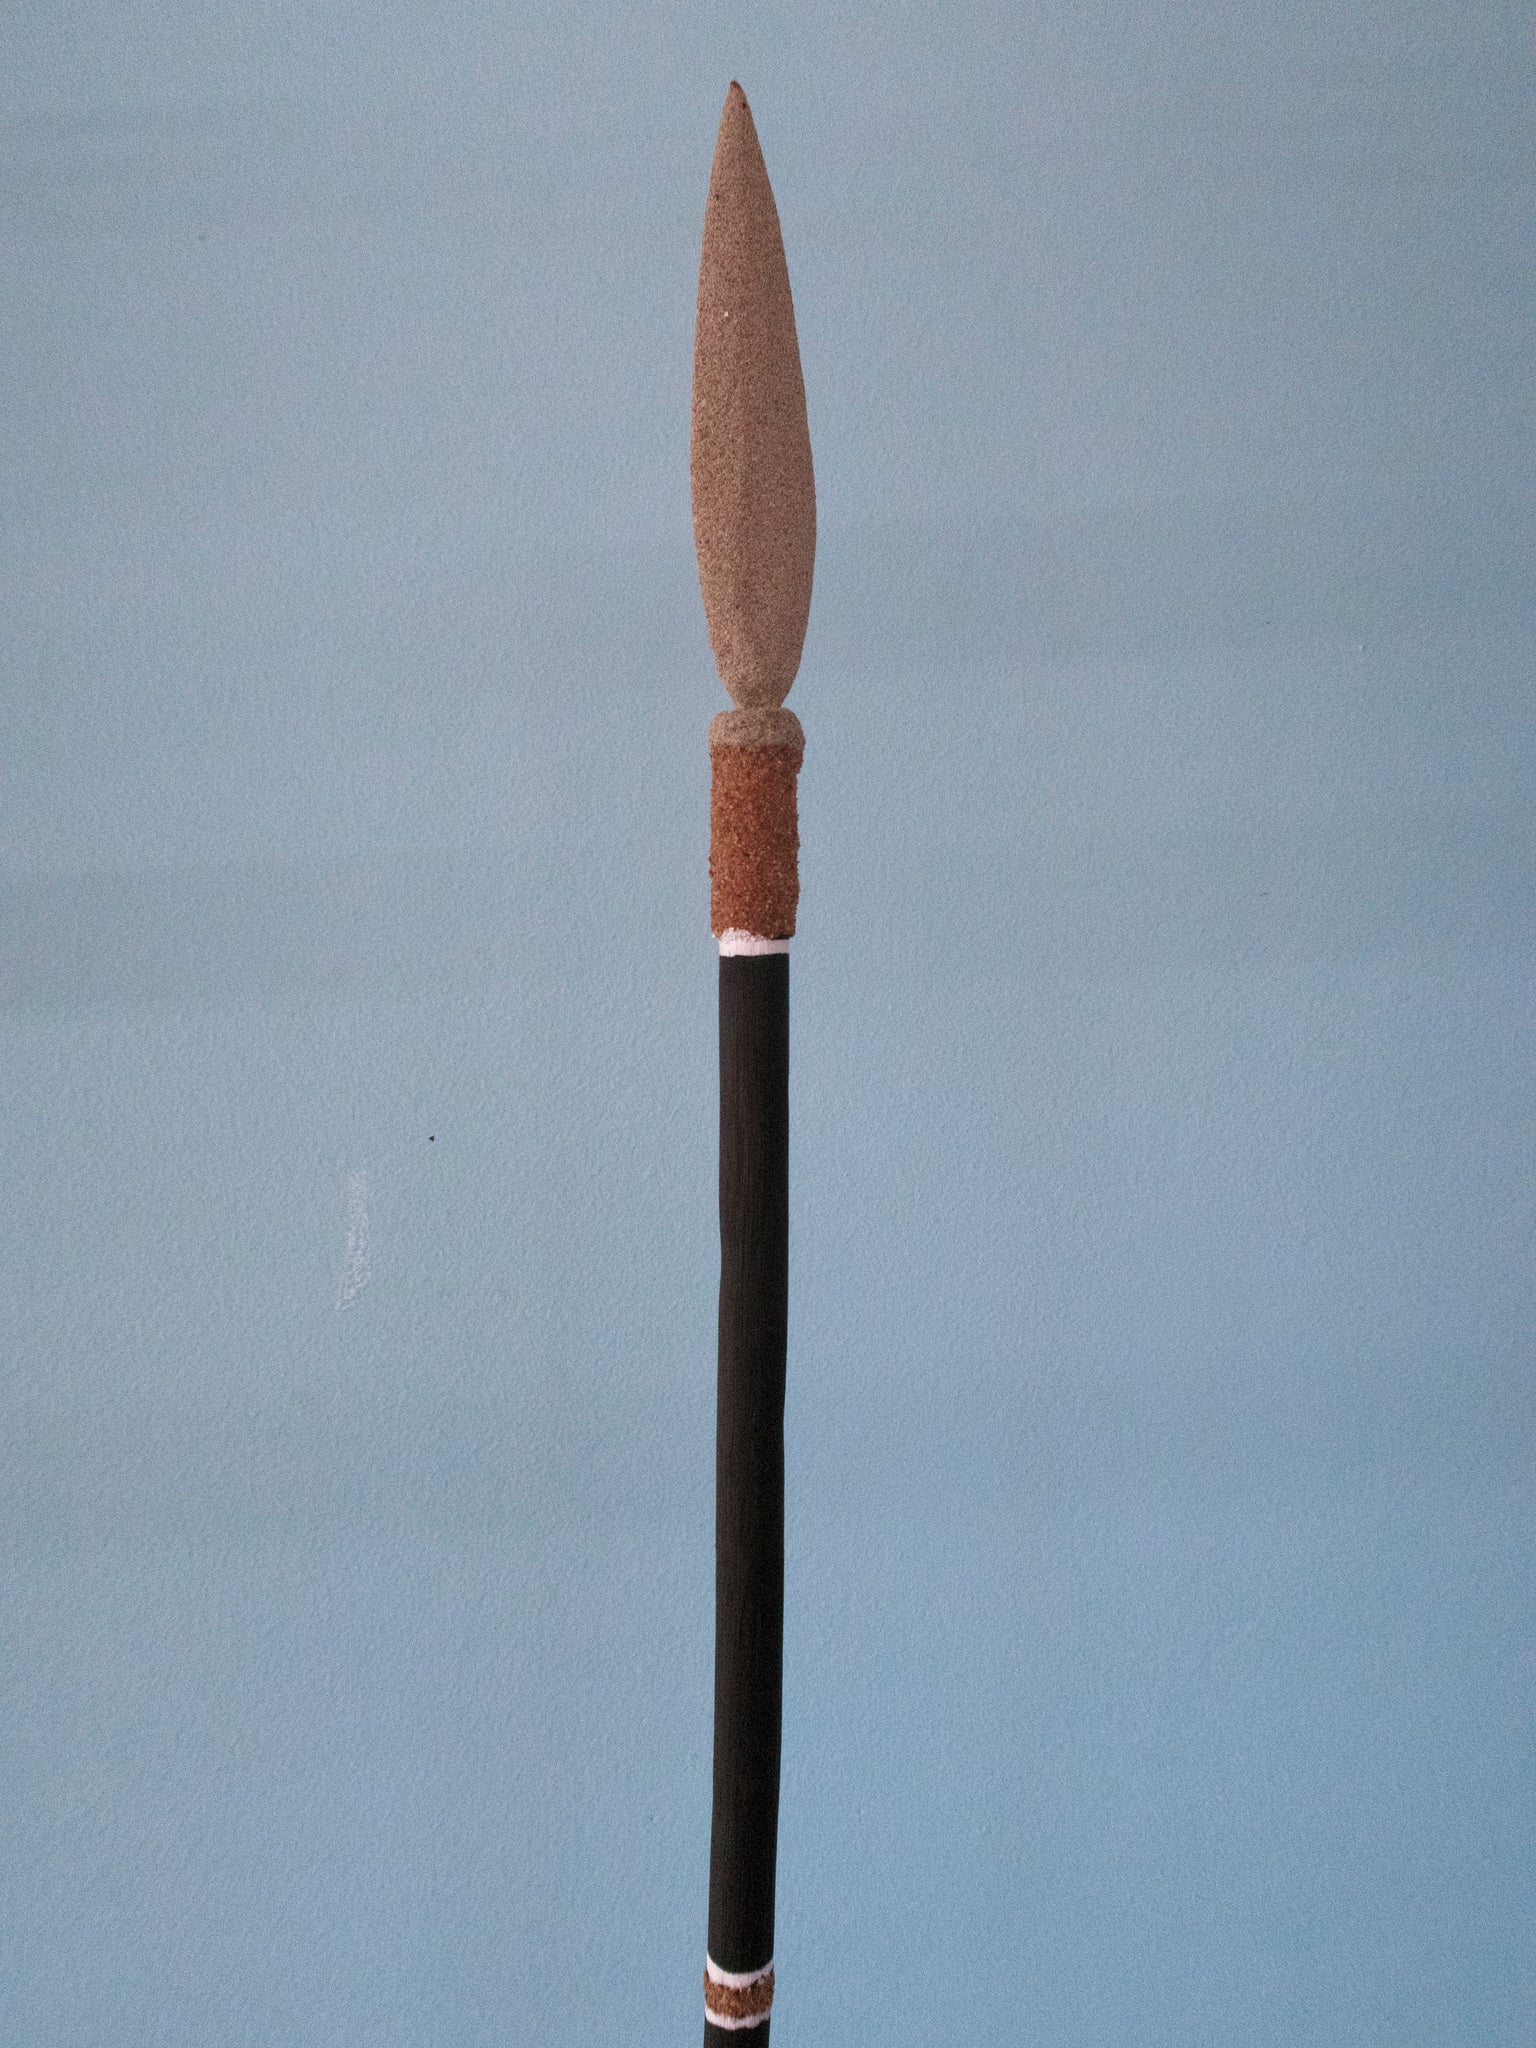 17. Spear